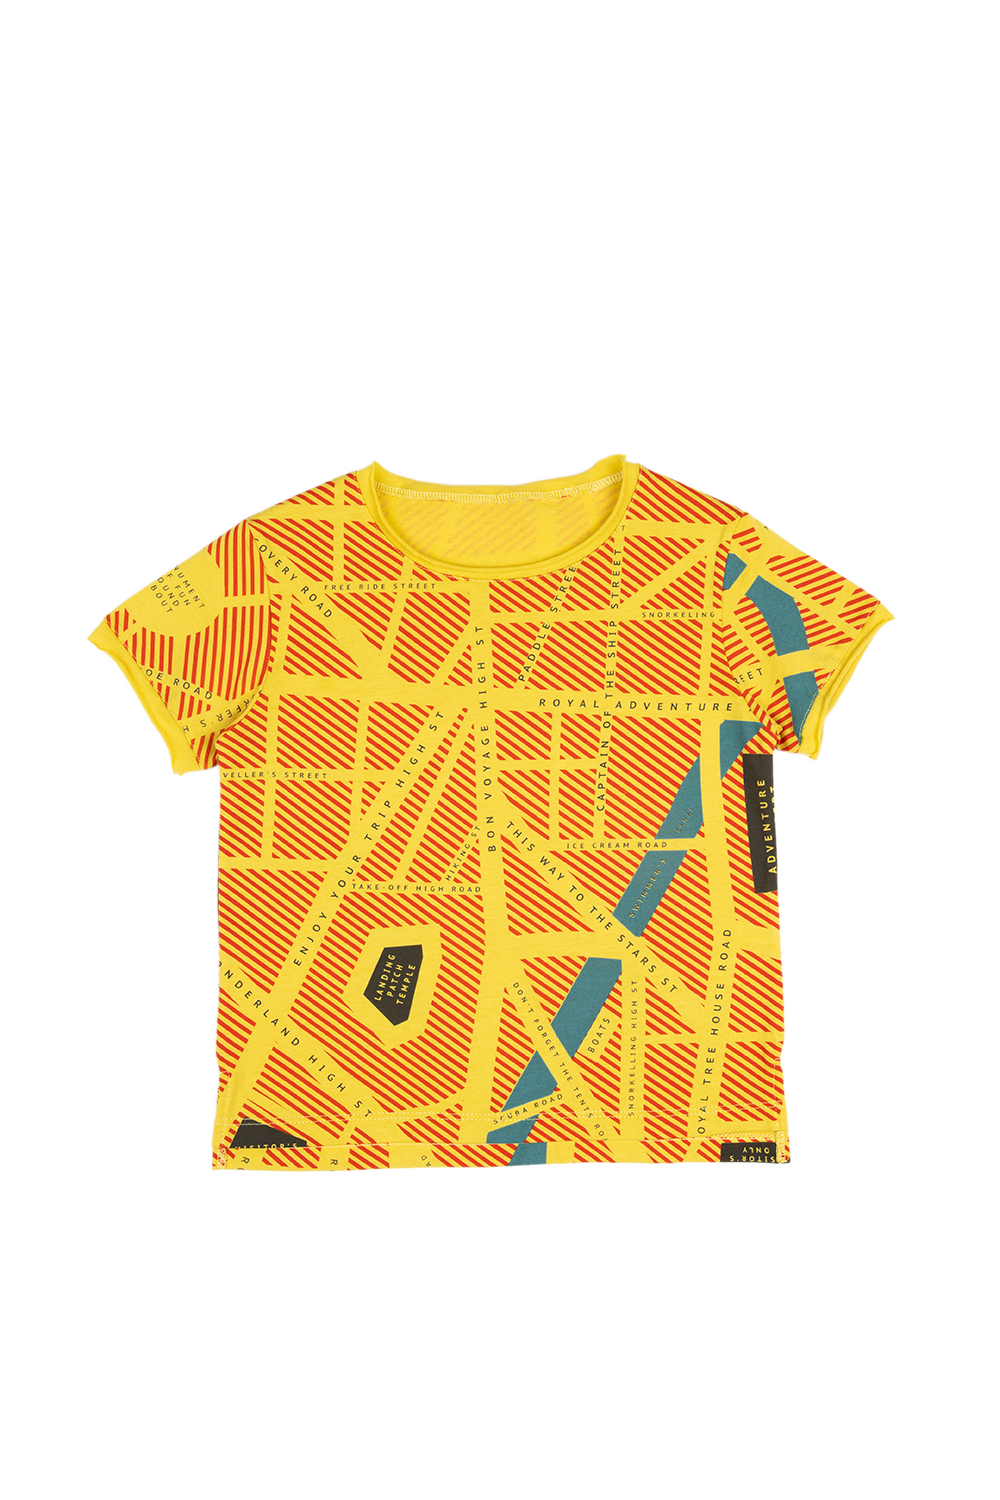 t-shirt city map allover yellow